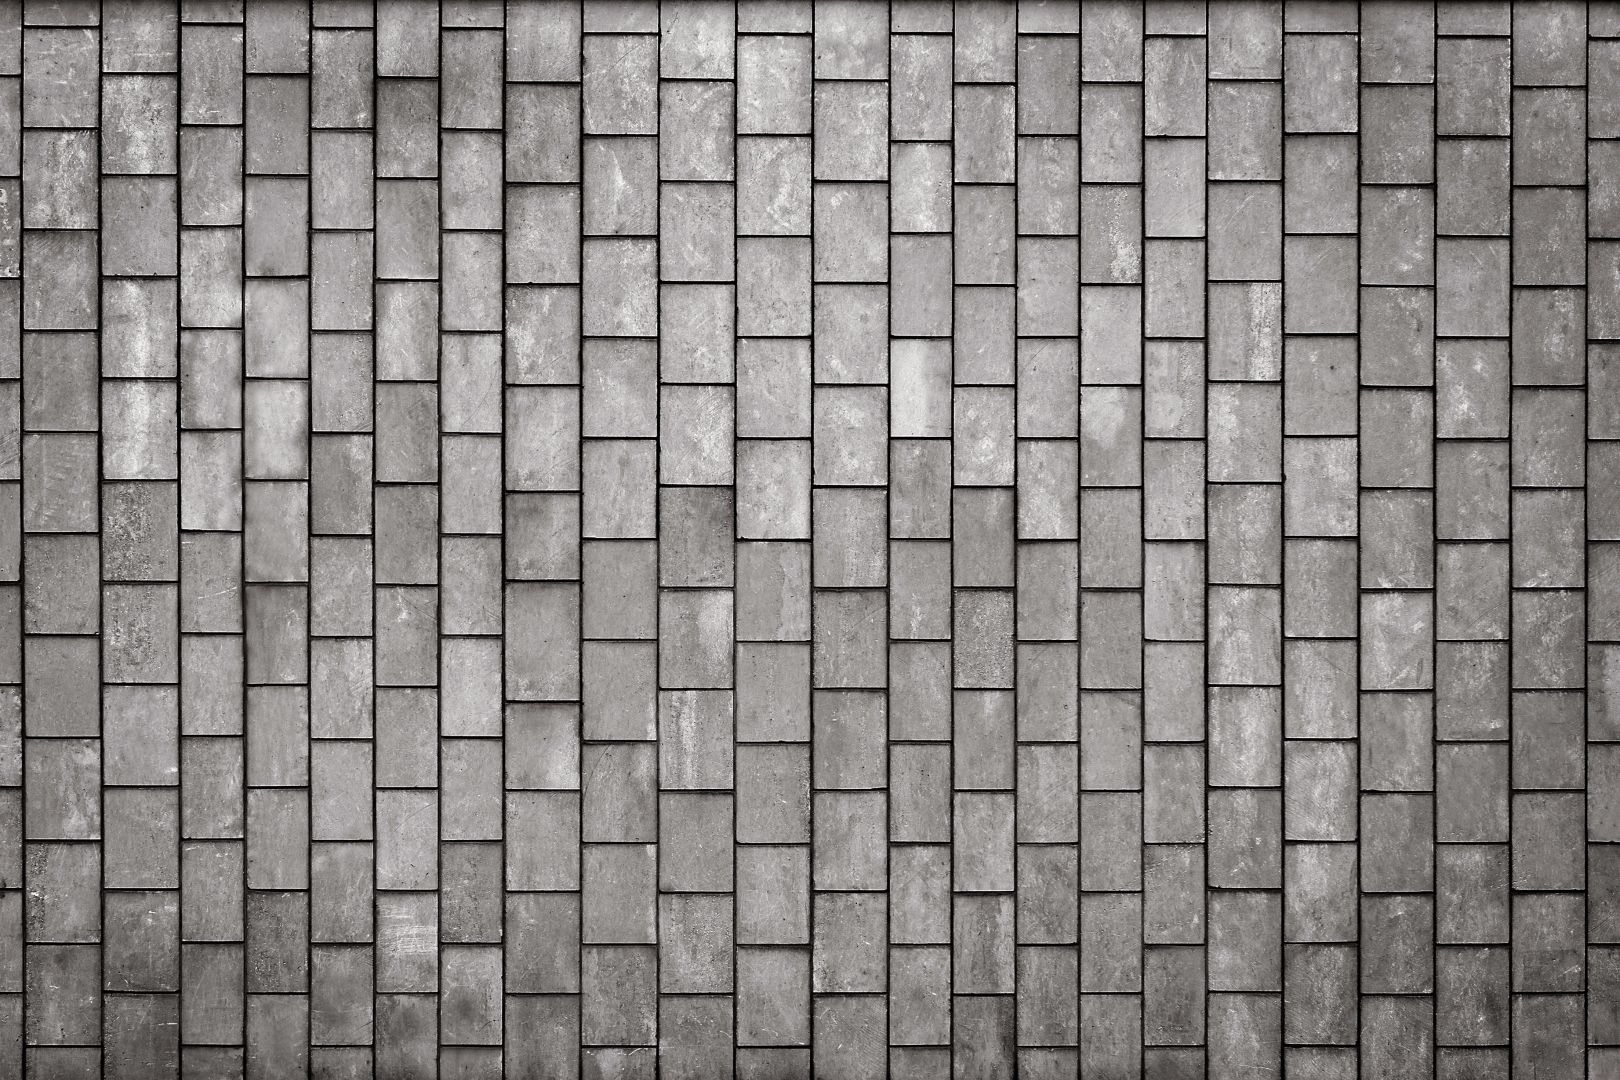 Pokládka zámkové dlažby na dvorku před domem, 20 m2, Praha